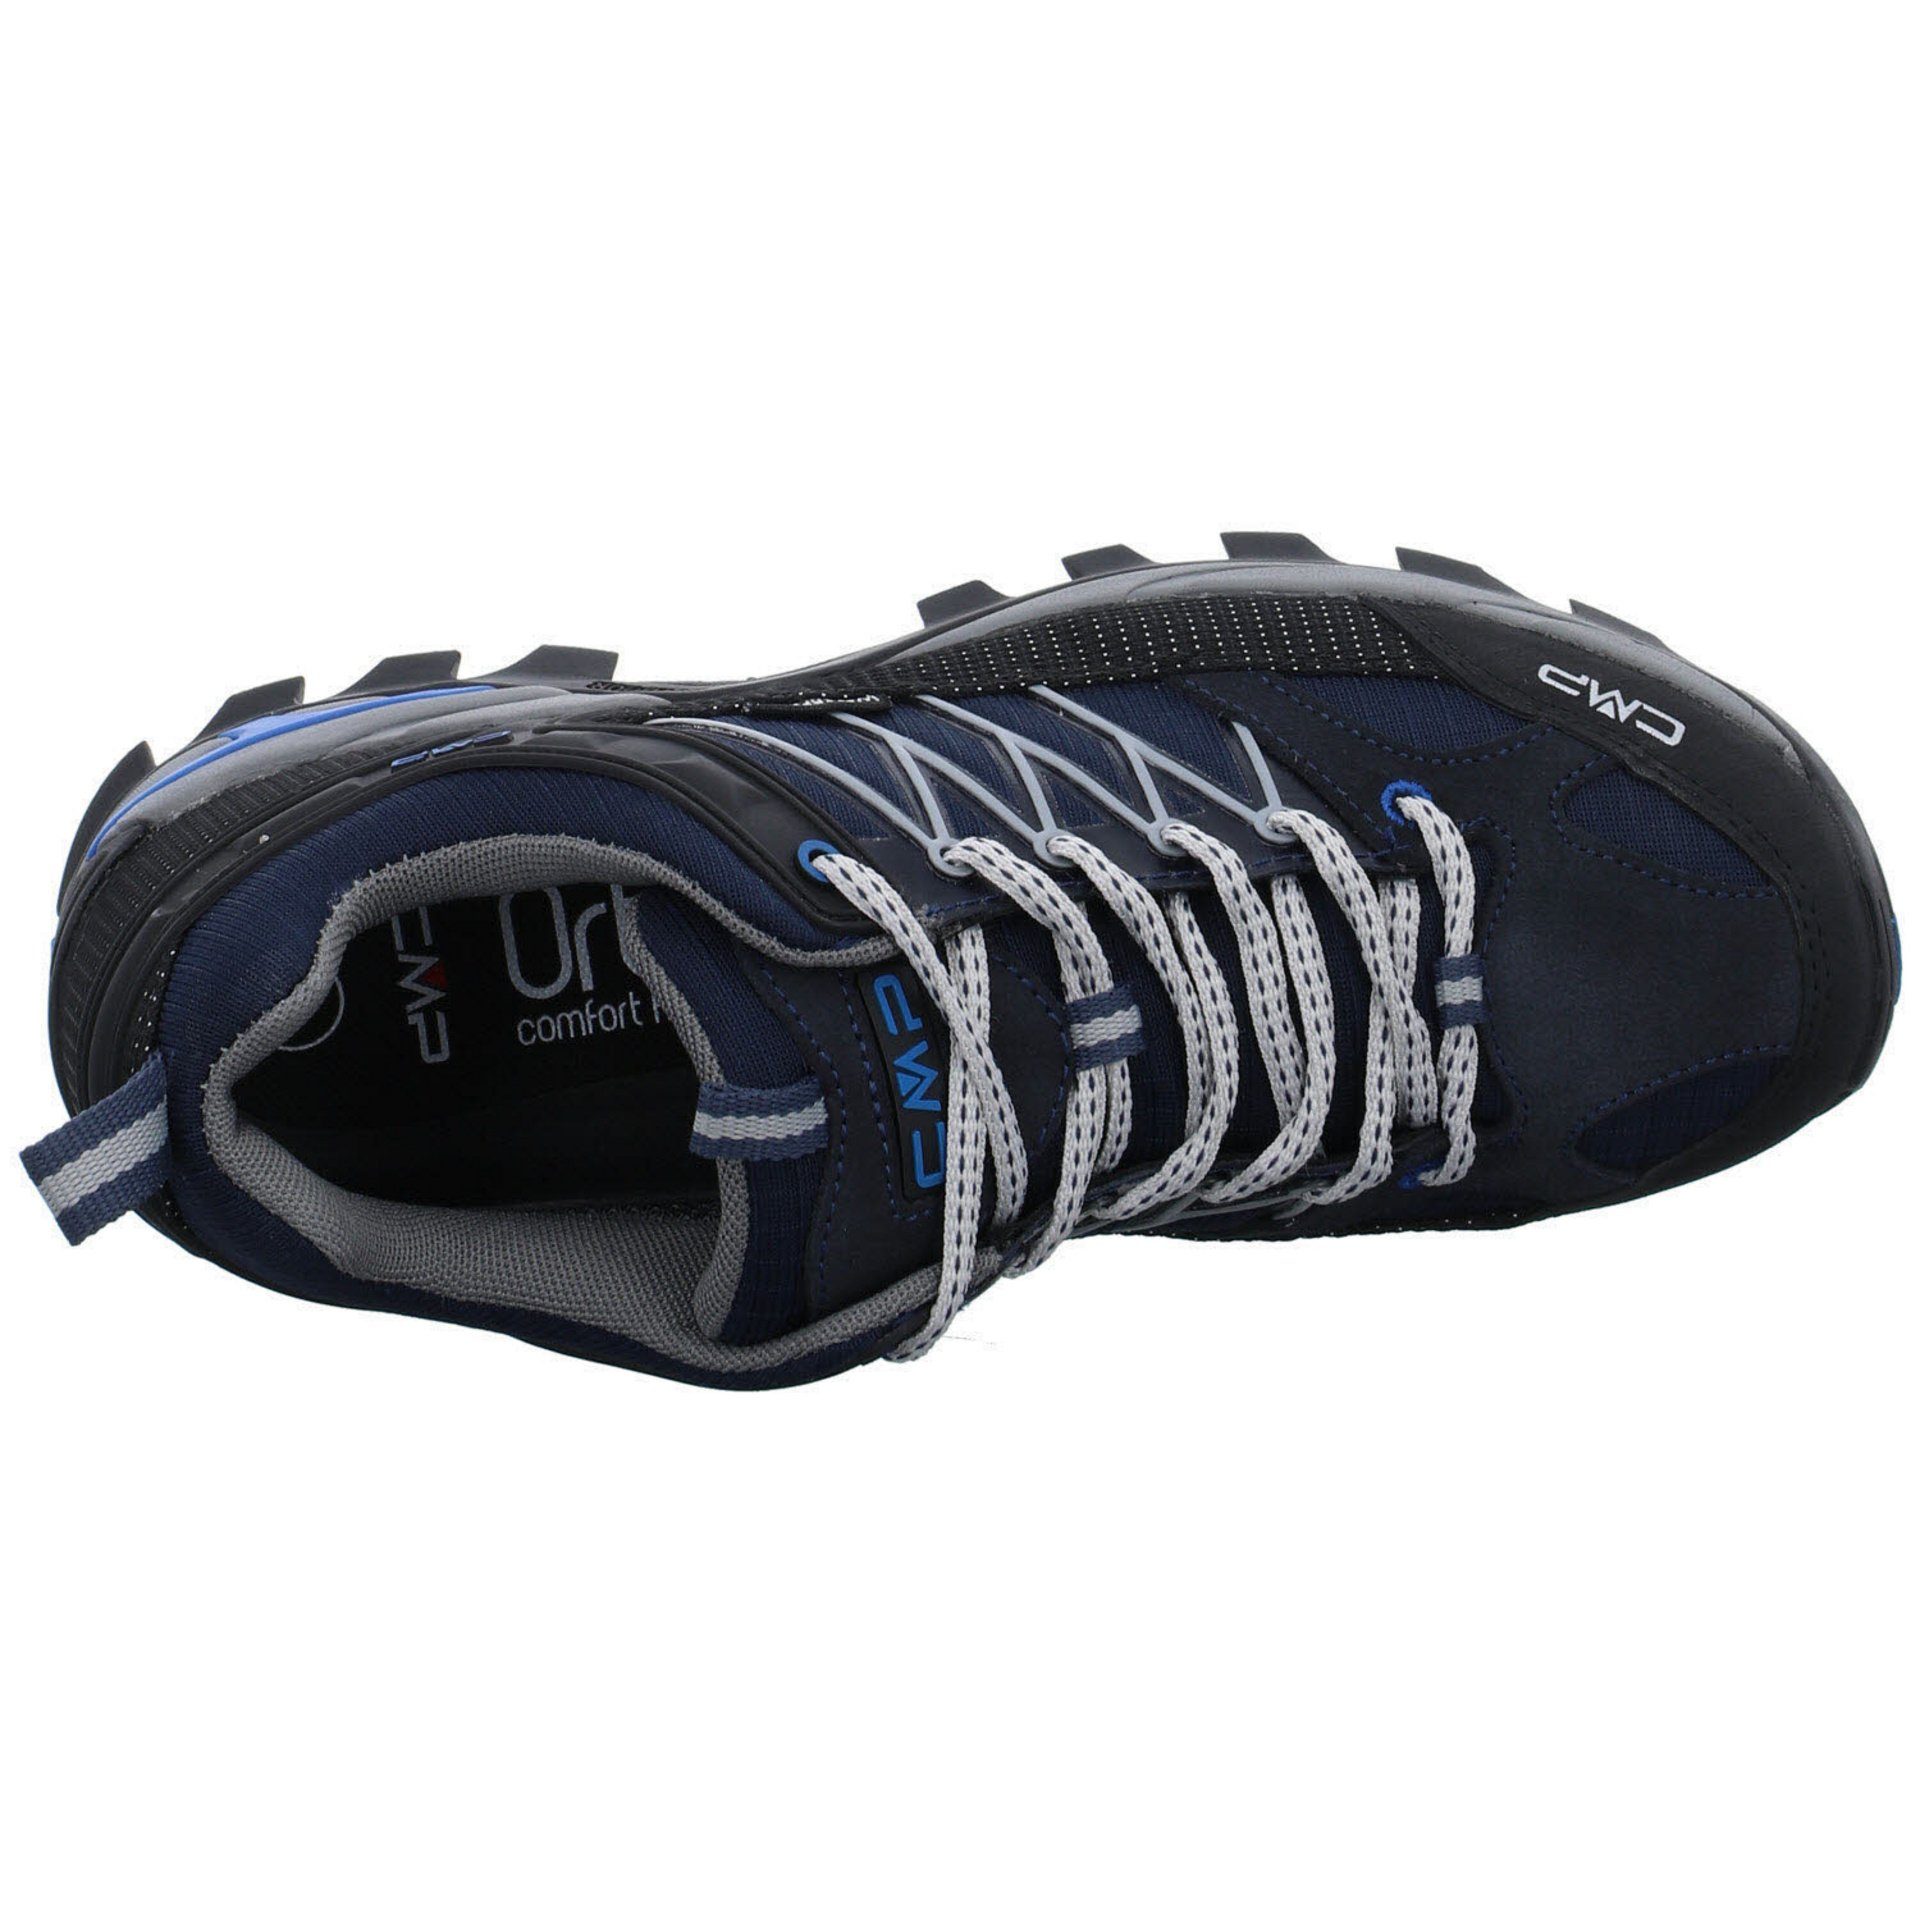 Outdoorschuh Outdoor Outdoorschuh Rigel (295) Leder-/Textilkombination CMP dunkelblau Schuhe Herren Low